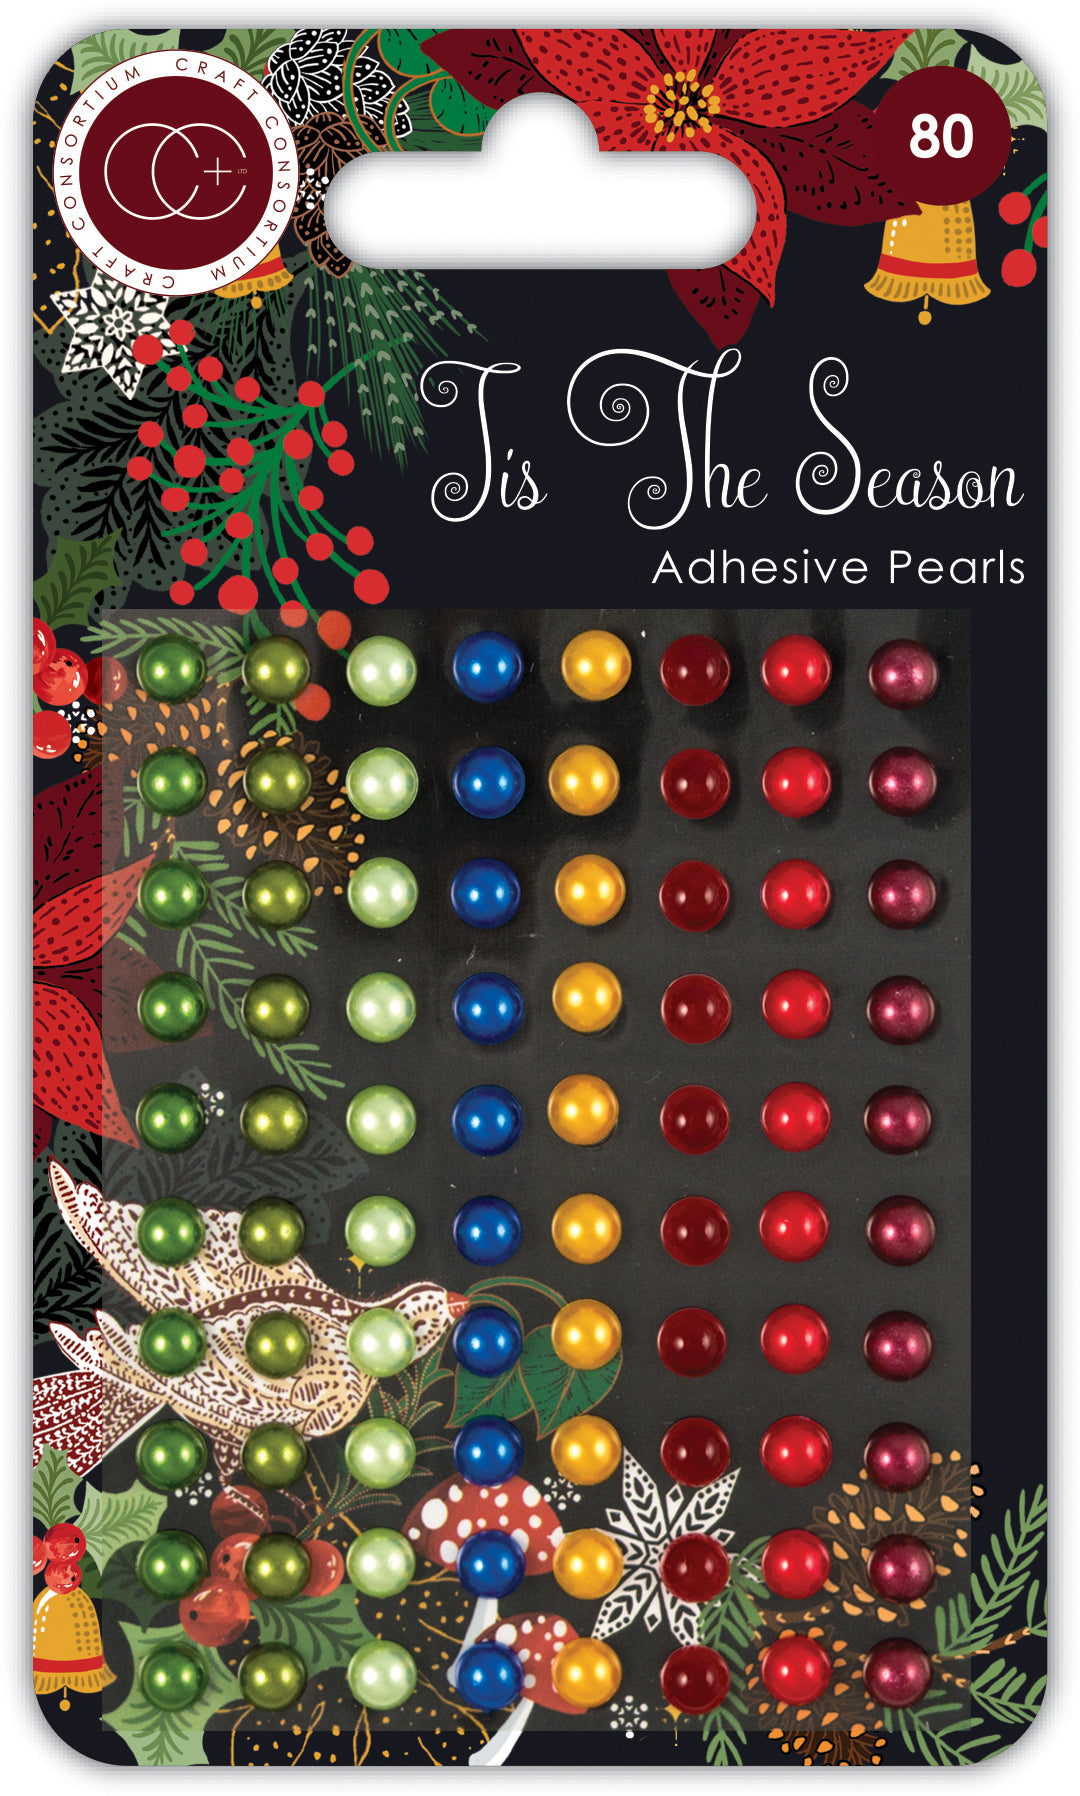 Craft Consortium Tis the Season - Adhesive Pearls